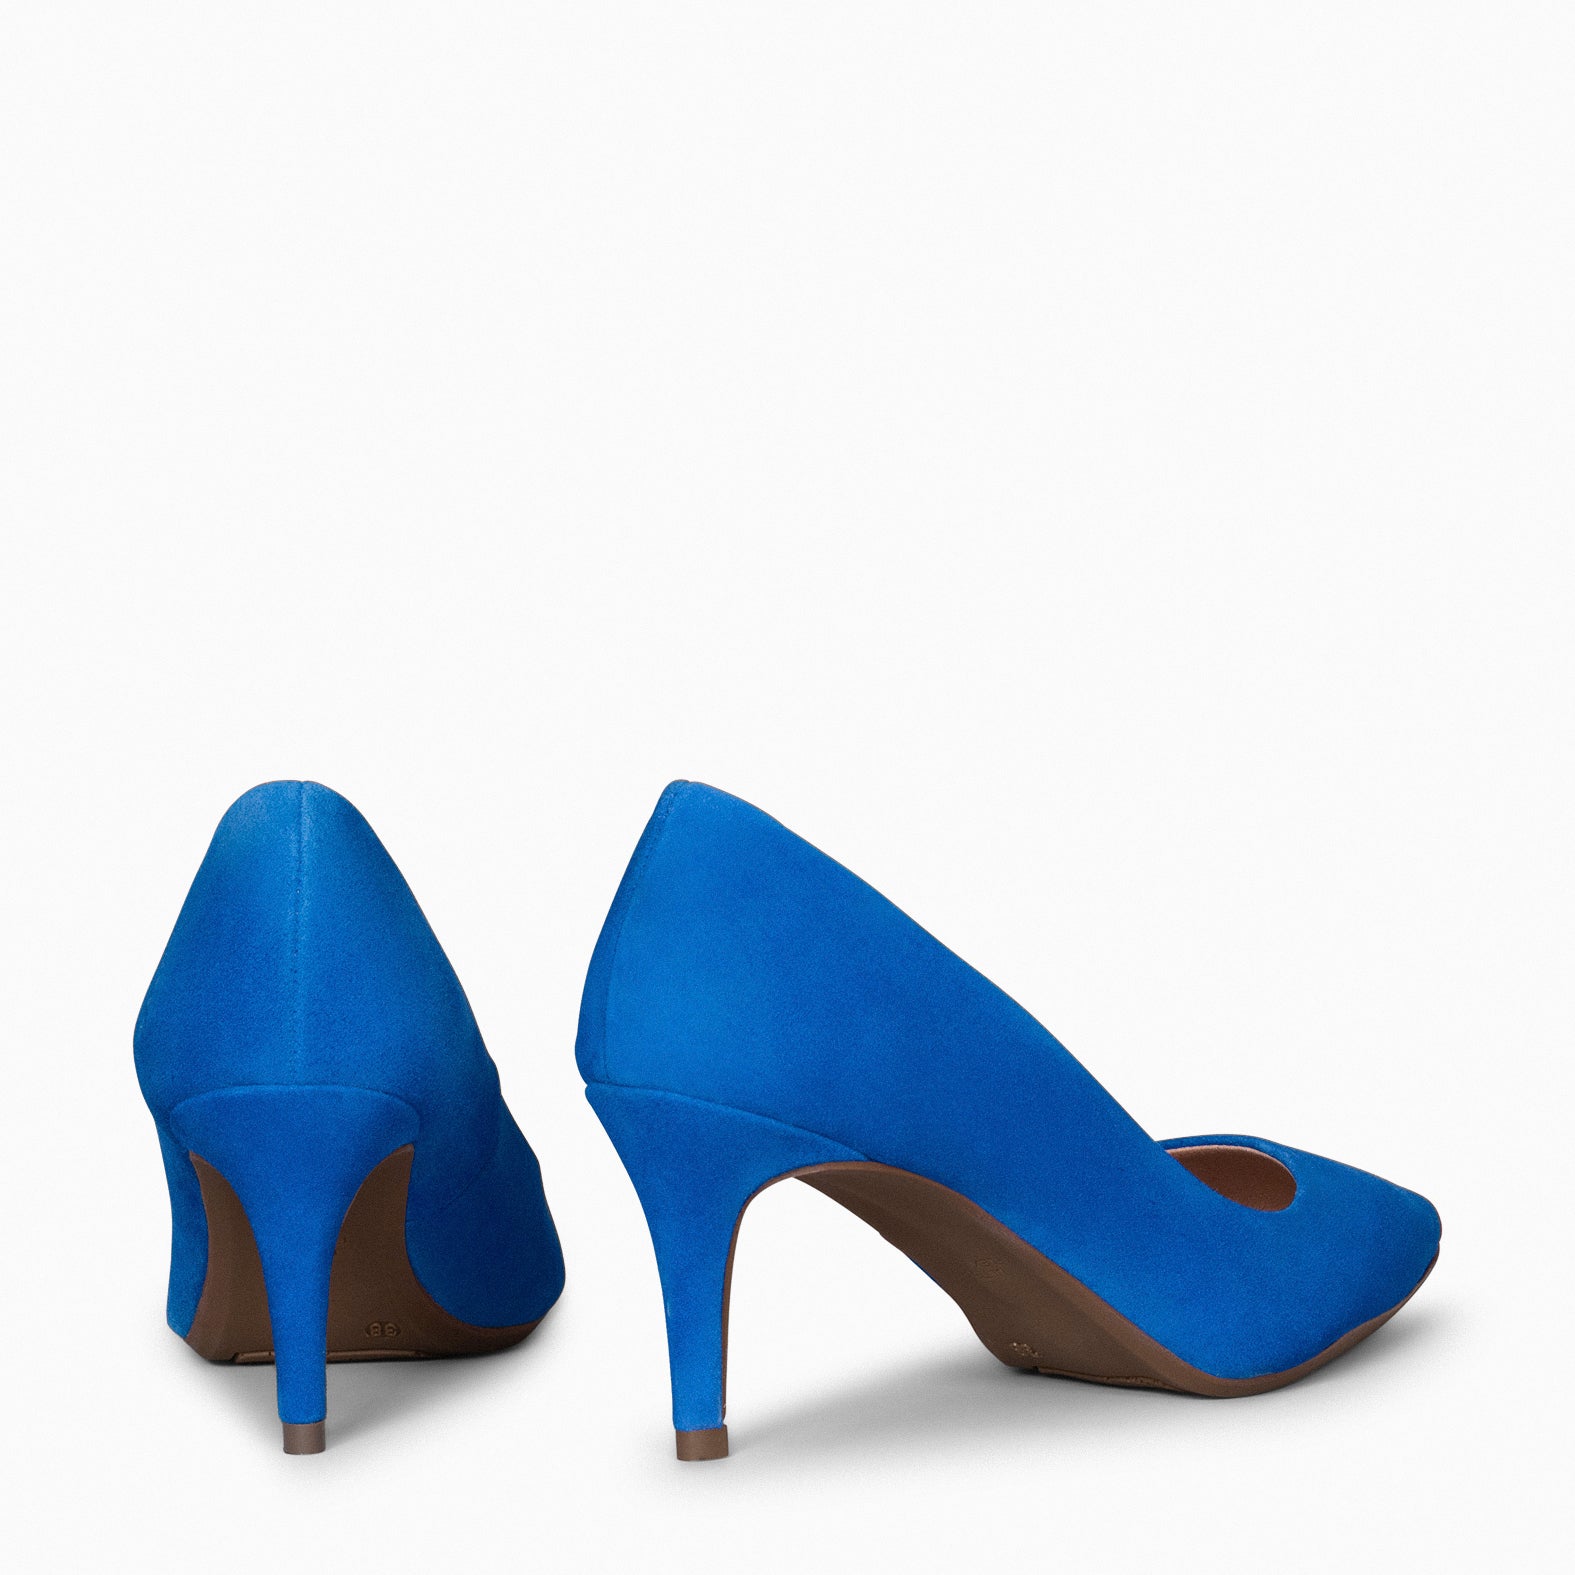 STILETTO – ELECTRIC BLUE suede leather stilettos